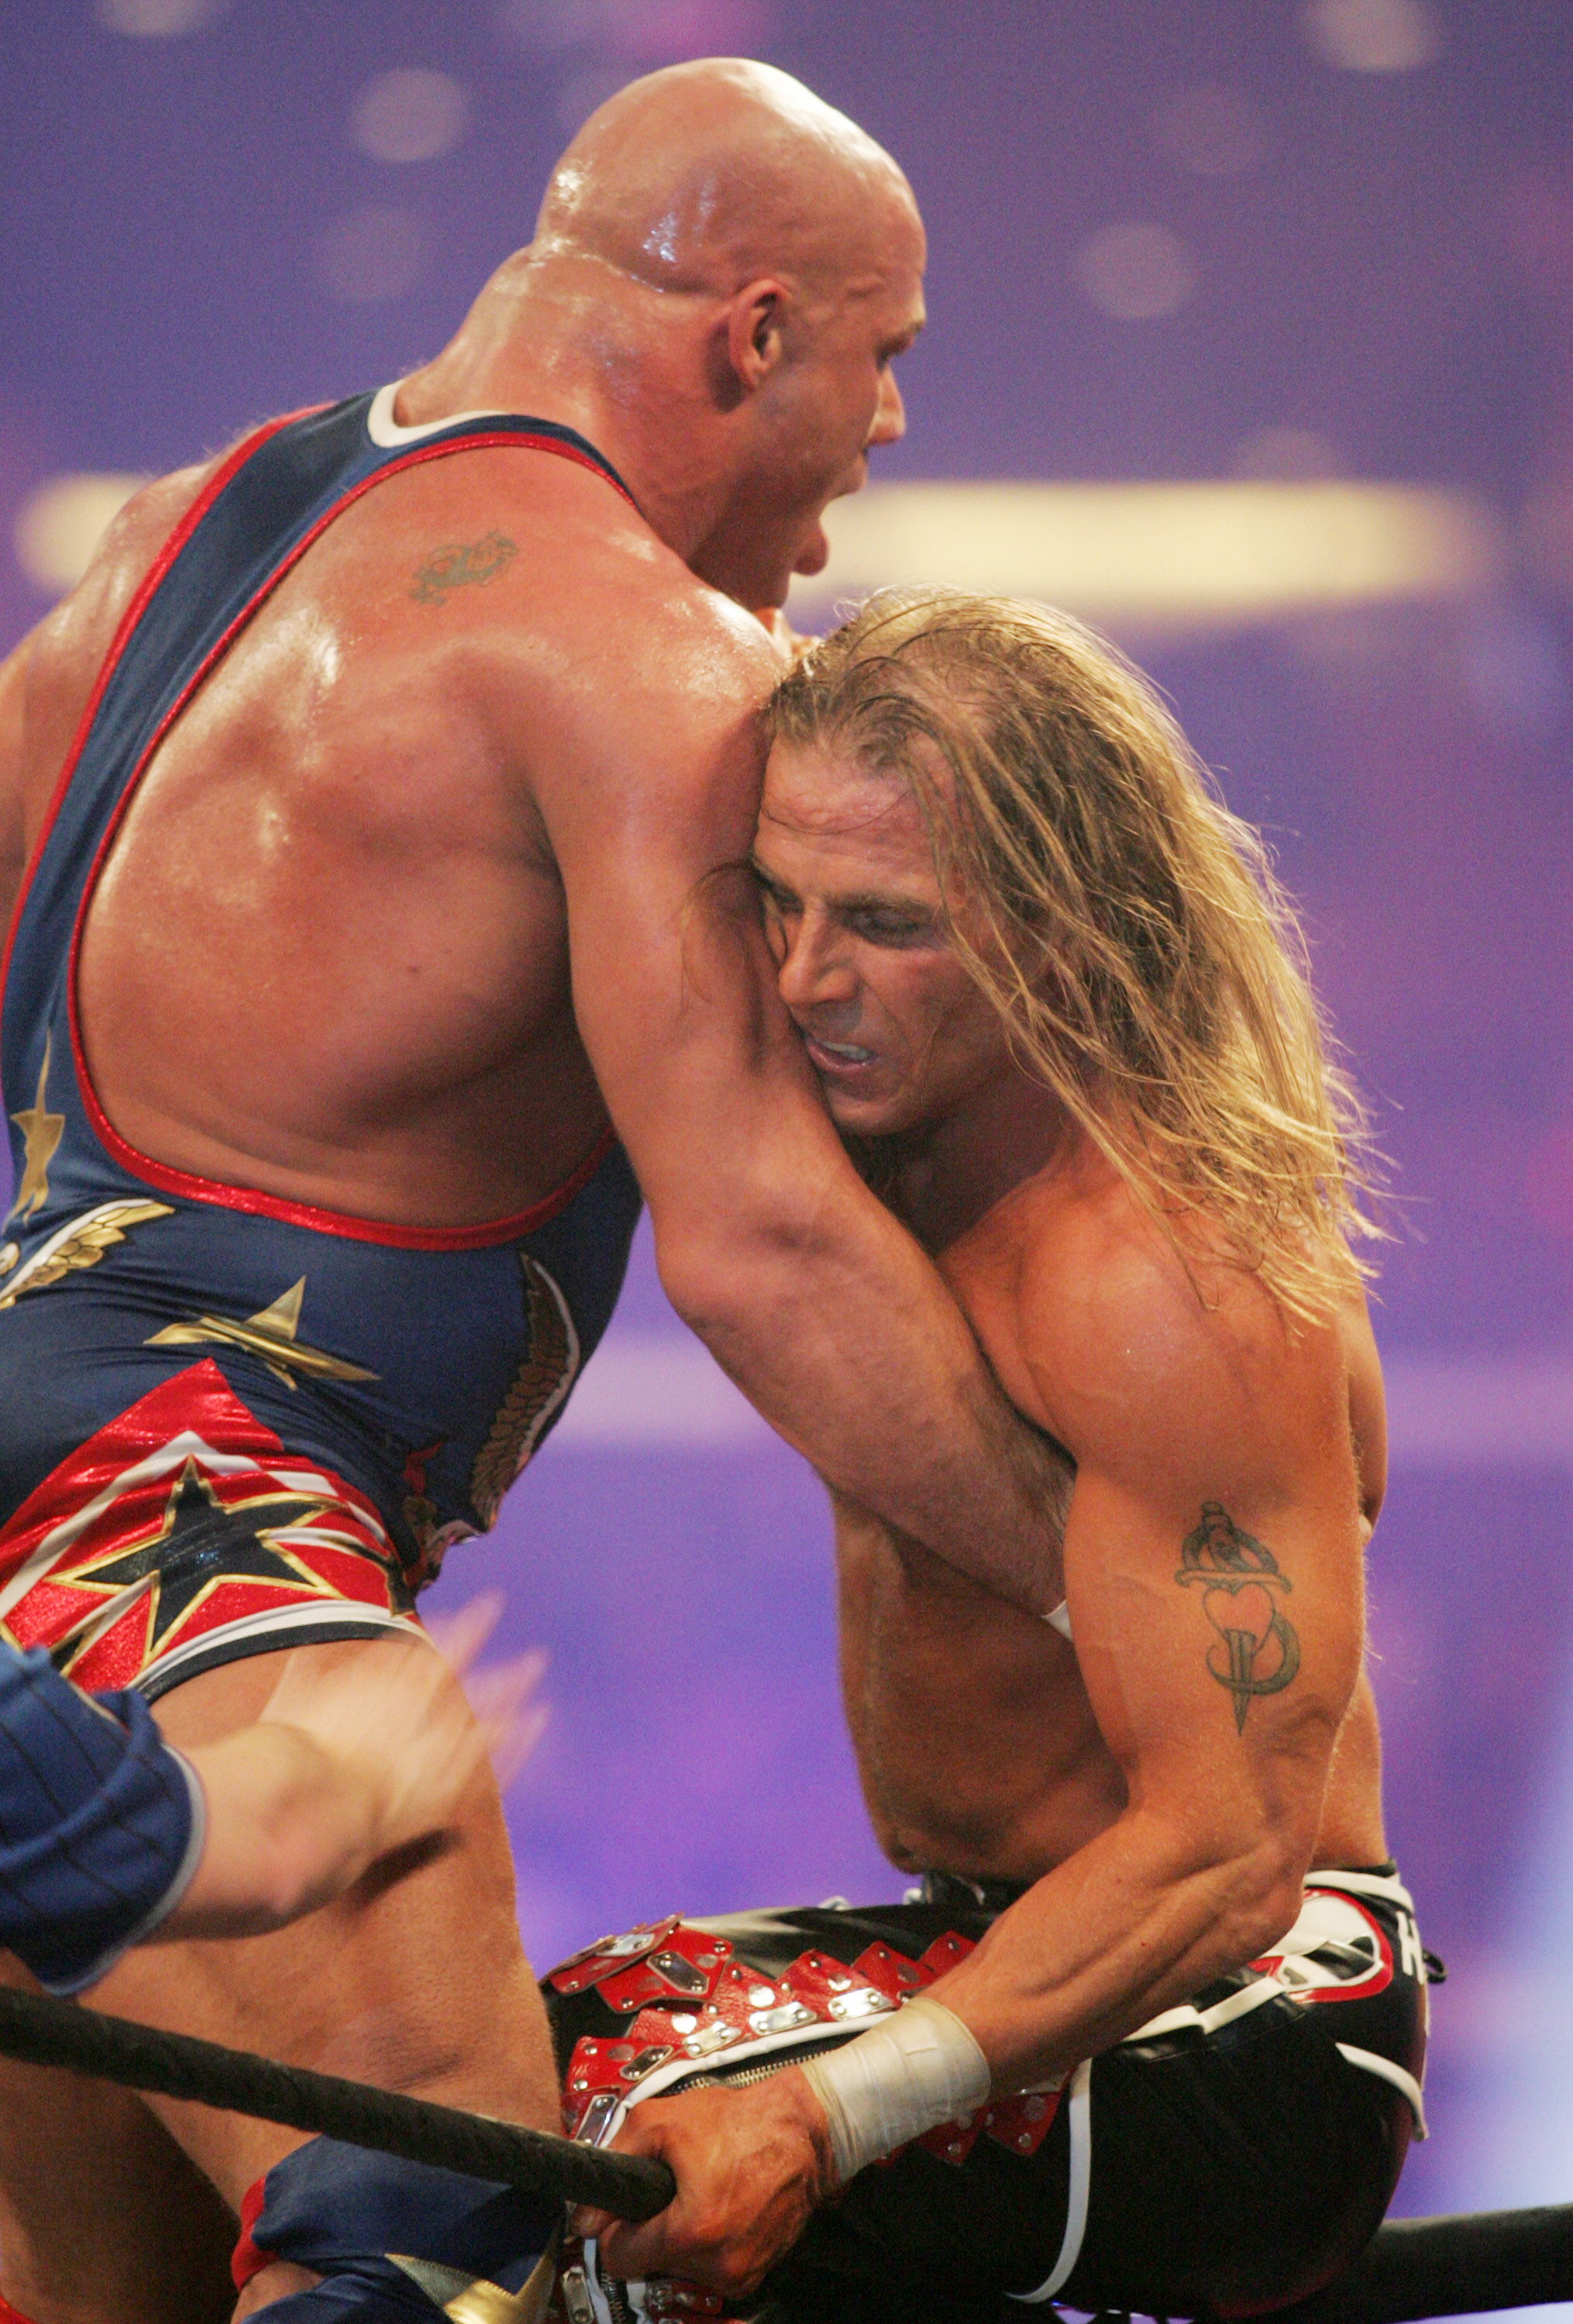 Kurt Angle v Shawn Michaels